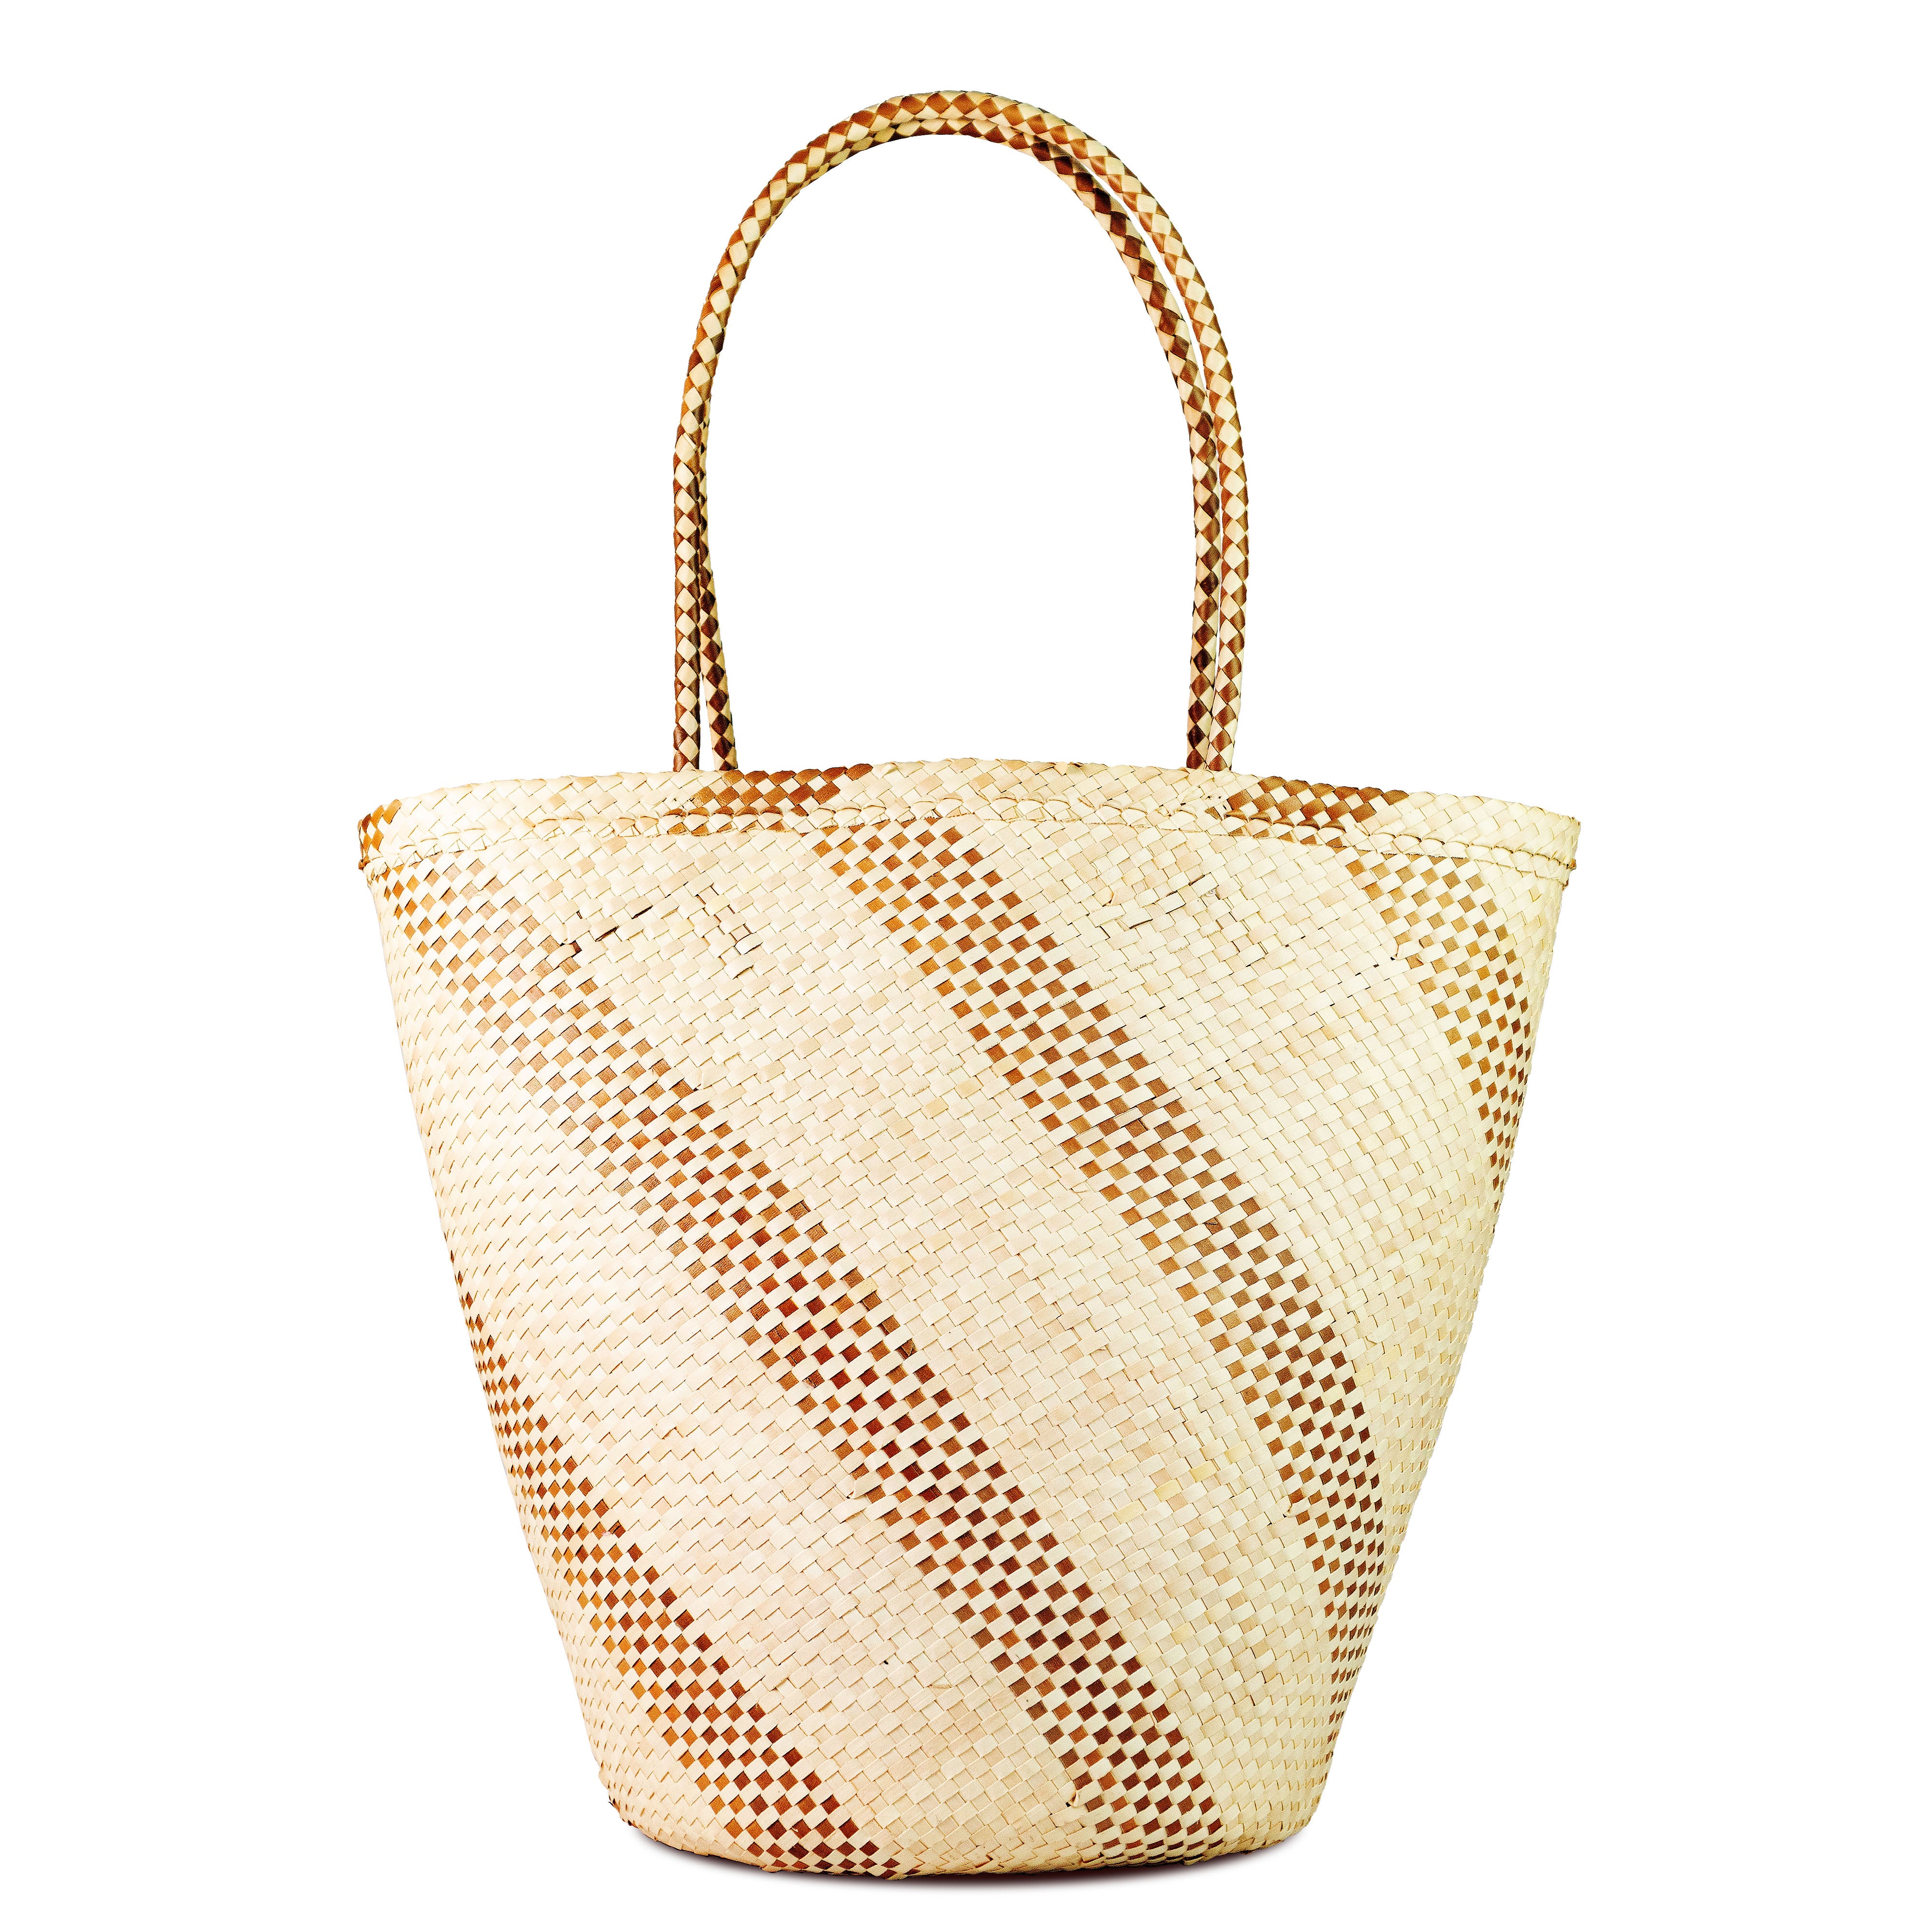 Natural and Tan Tote Shopper Shoulder Bag